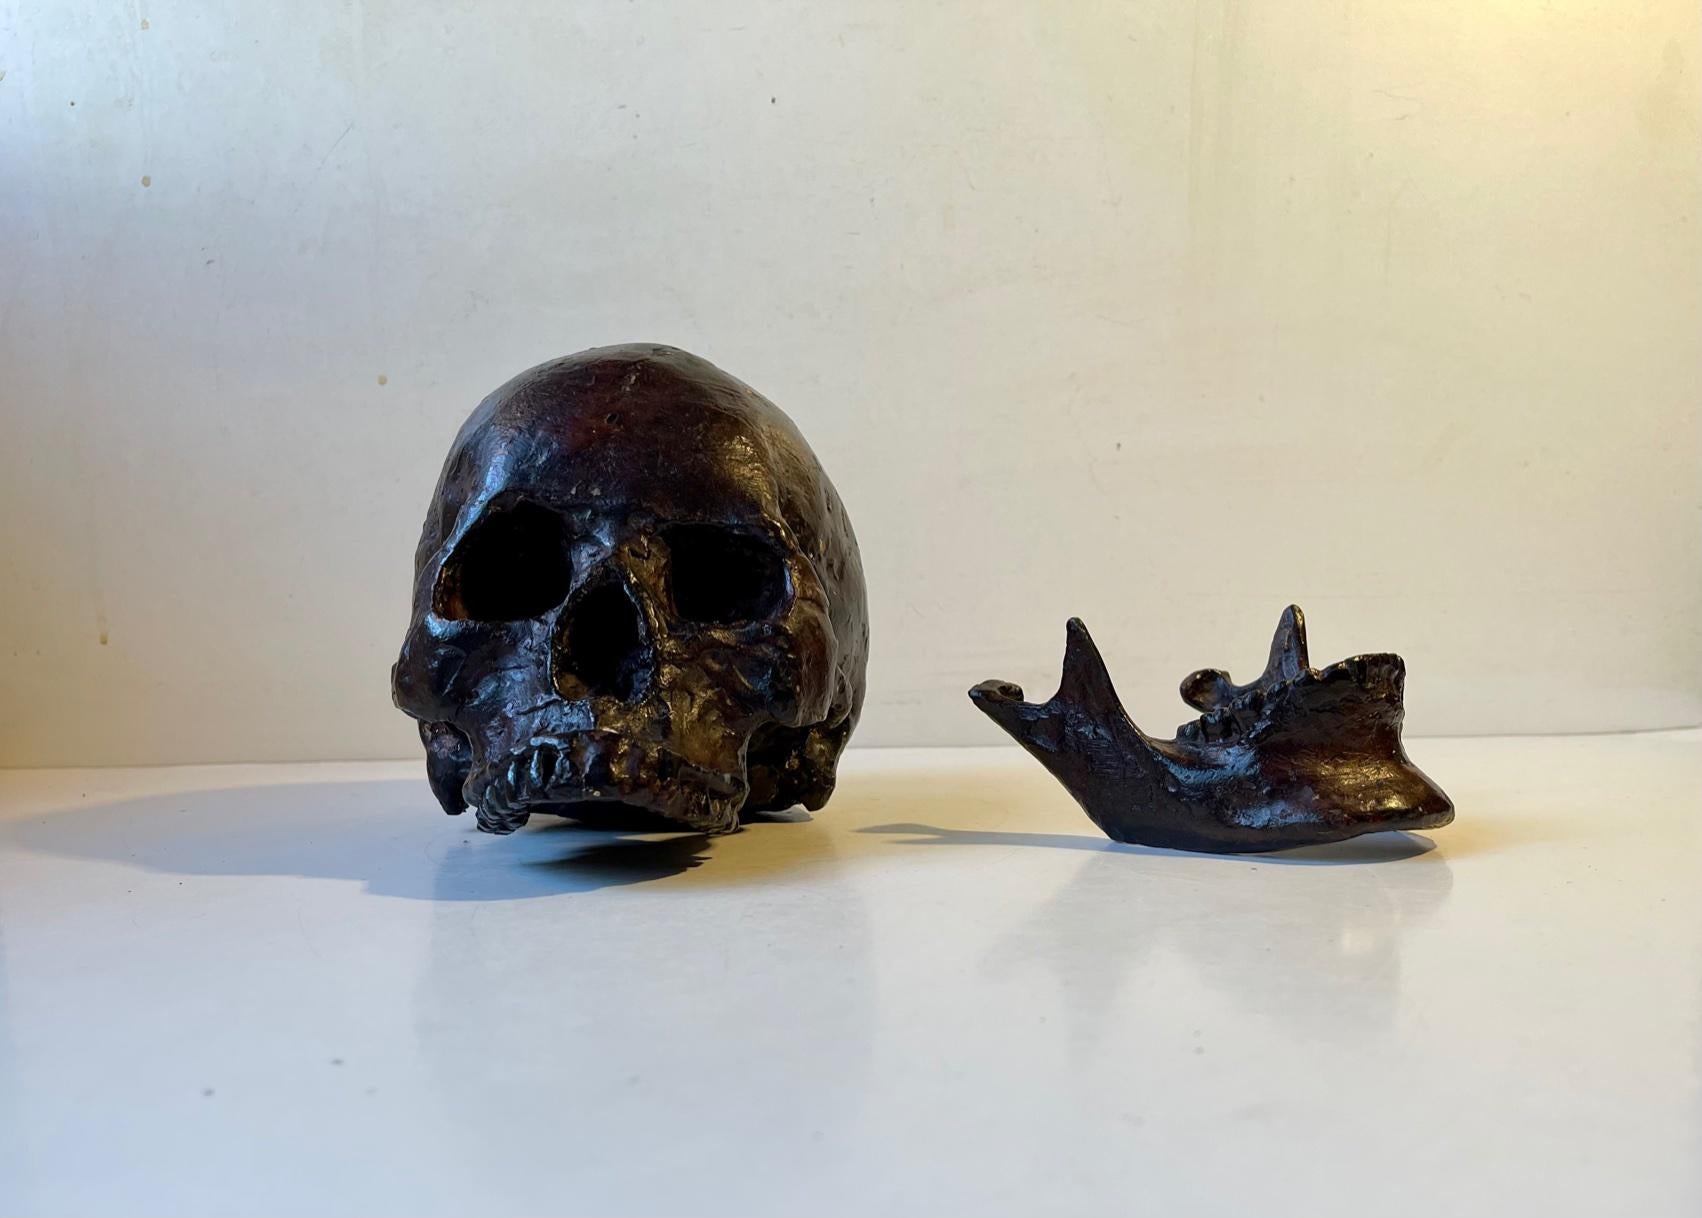 Vintage Bronze Cast of a Human Skull 1:1, 1950s 2